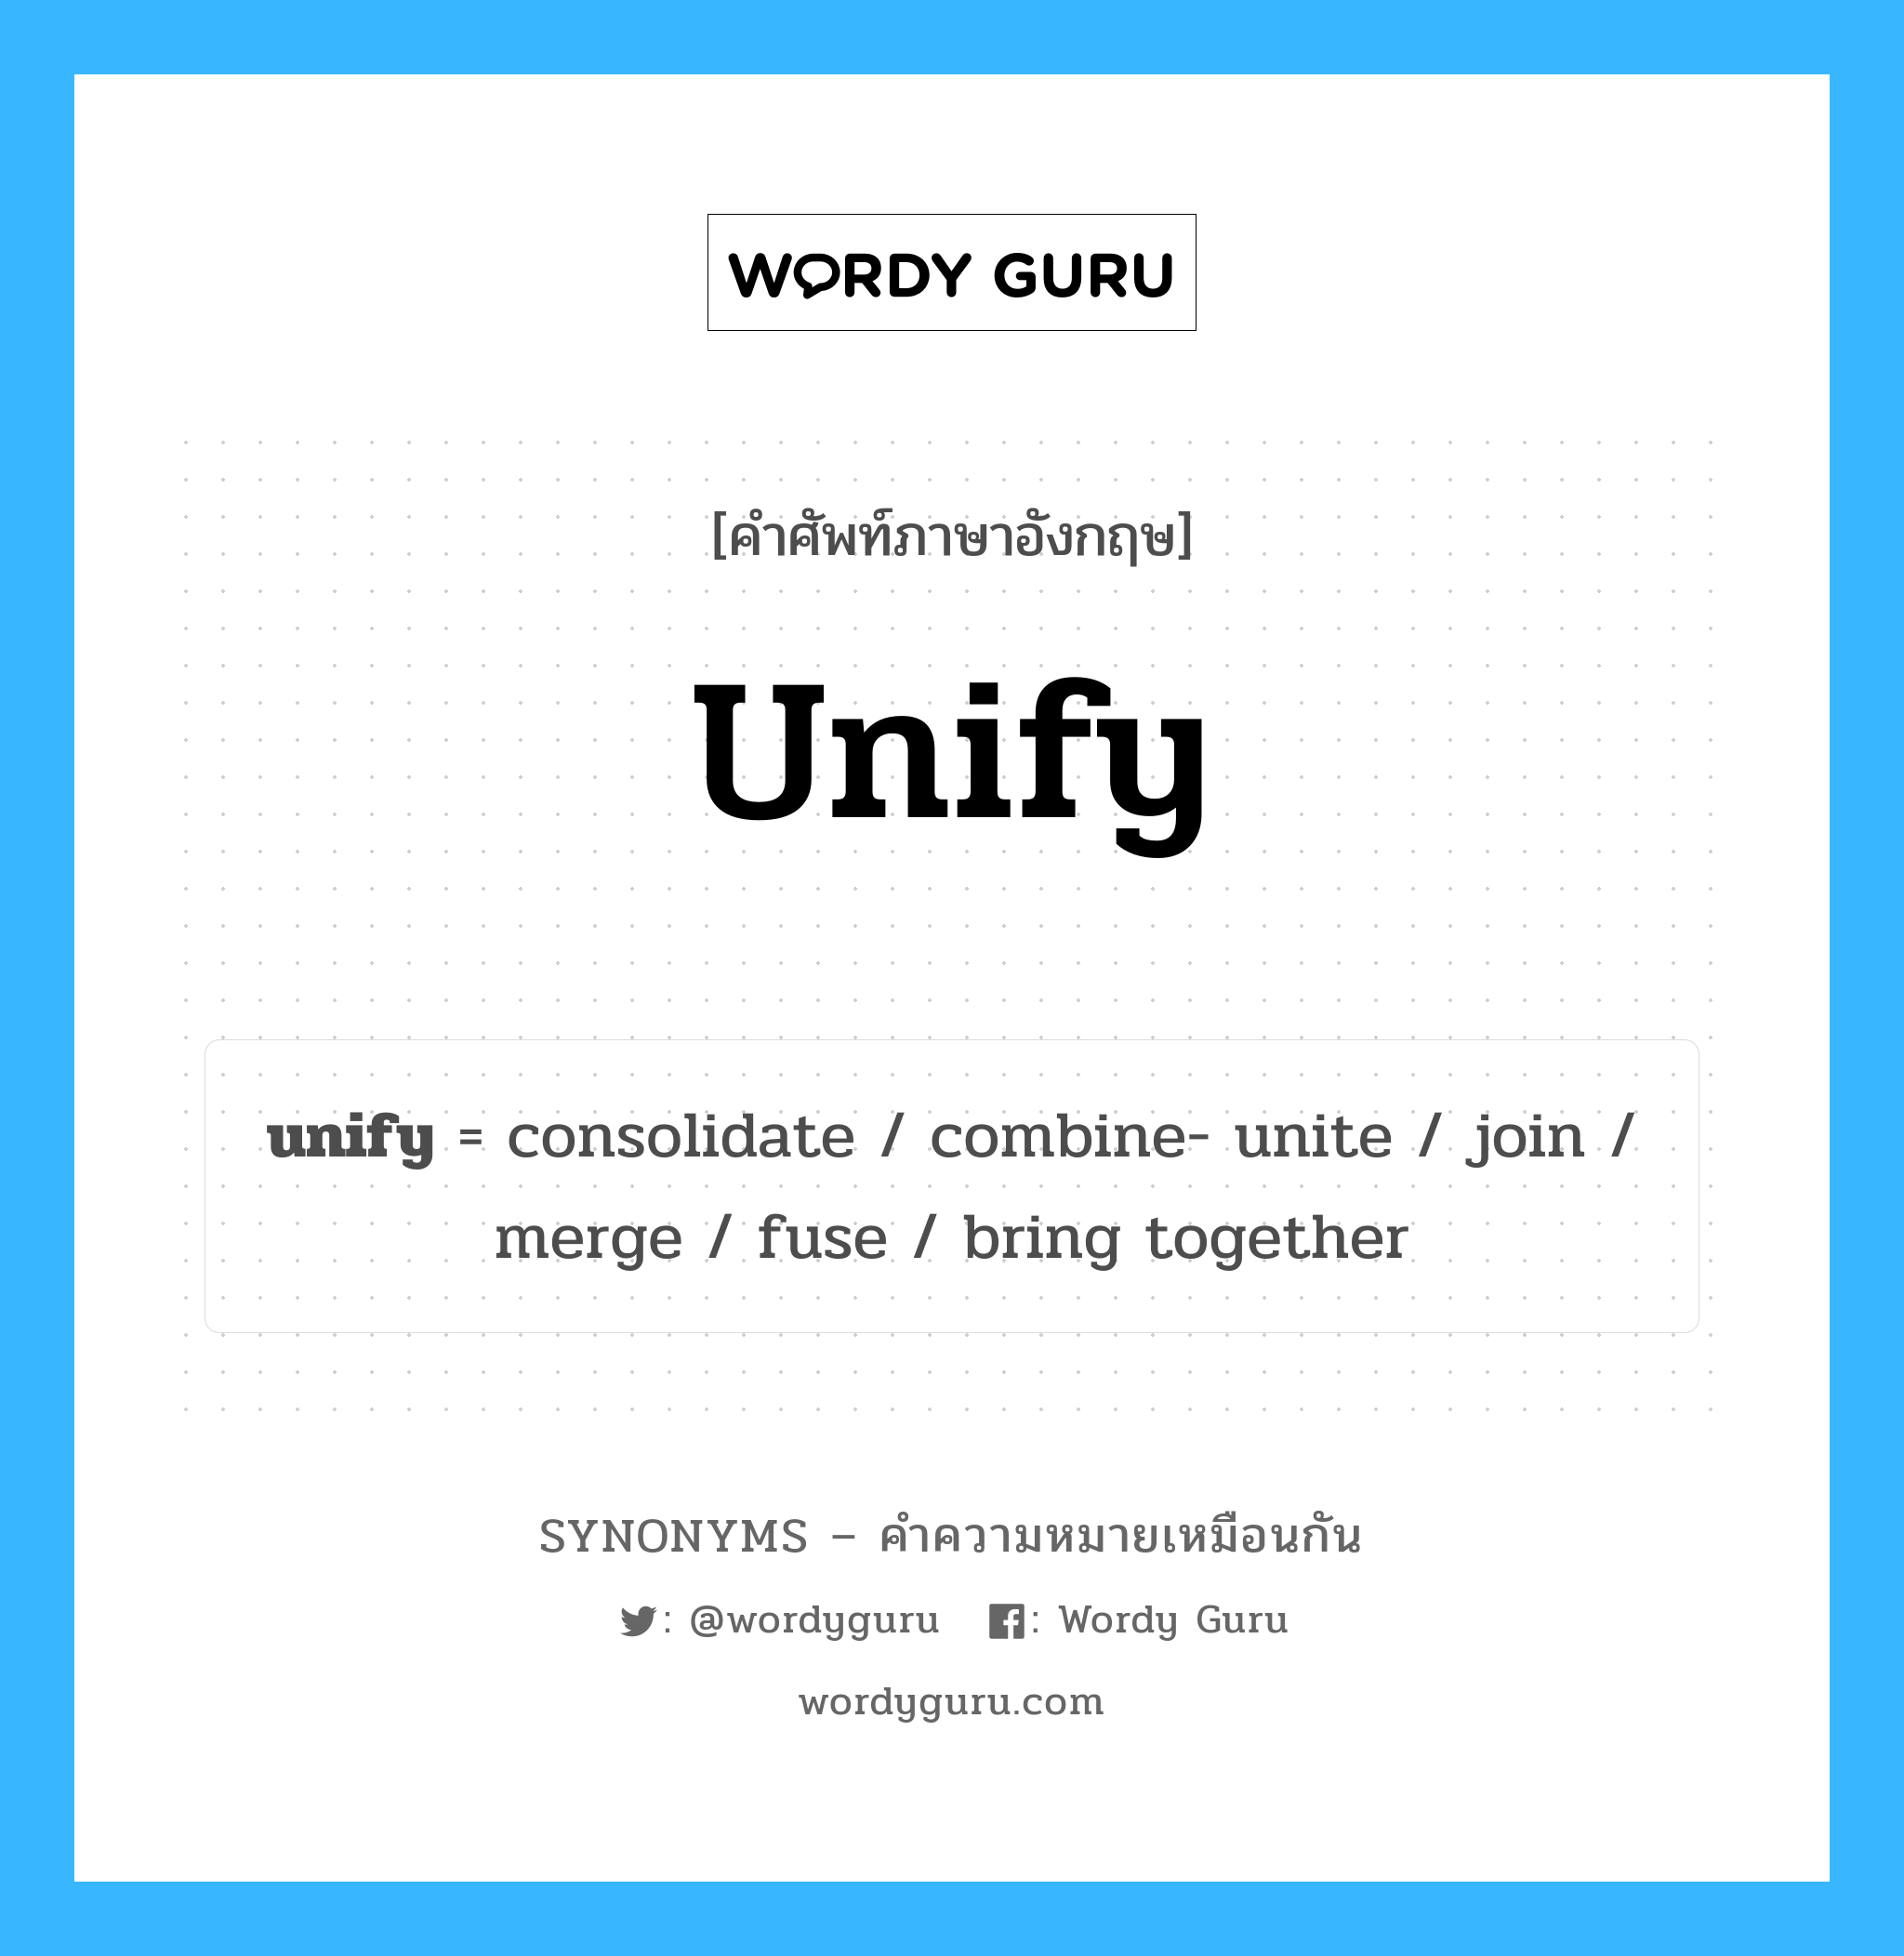 merge เป็นหนึ่งใน unify และมีคำอื่น ๆ อีกดังนี้, คำศัพท์ภาษาอังกฤษ merge ความหมายคล้ายกันกับ unify แปลว่า เวียน หมวด unify